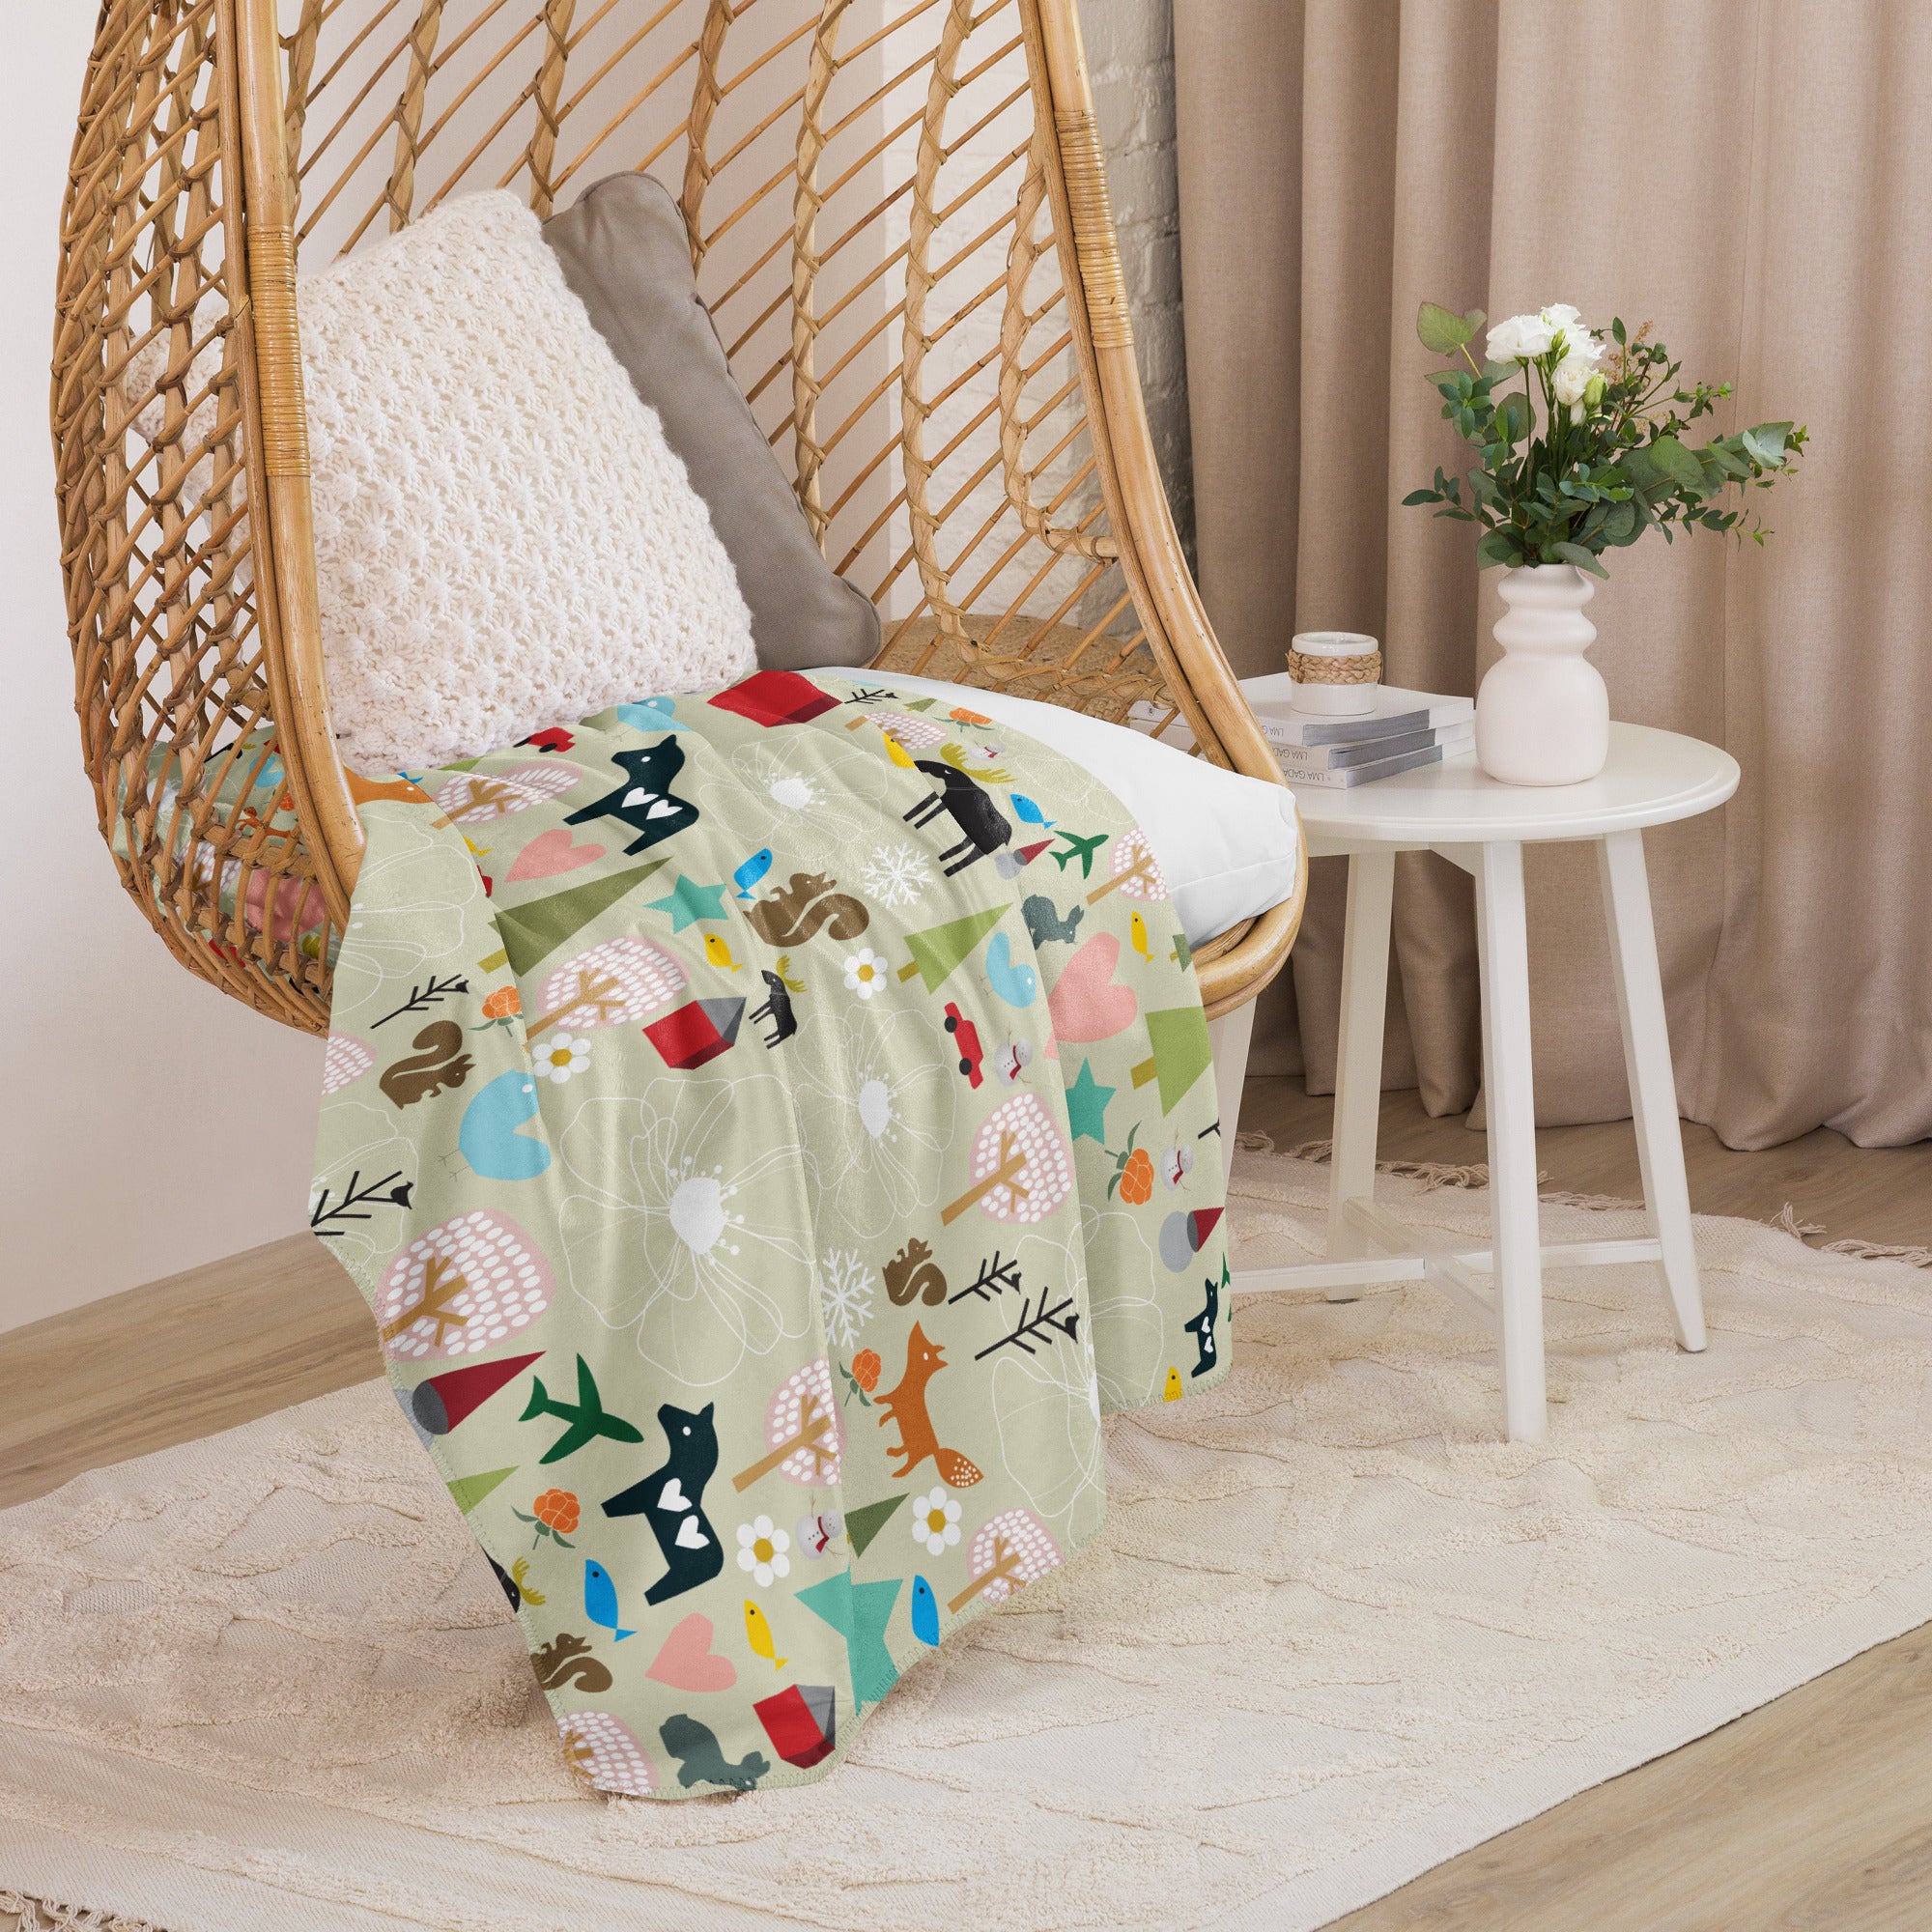 Baby Room Design | Sherpa blanket